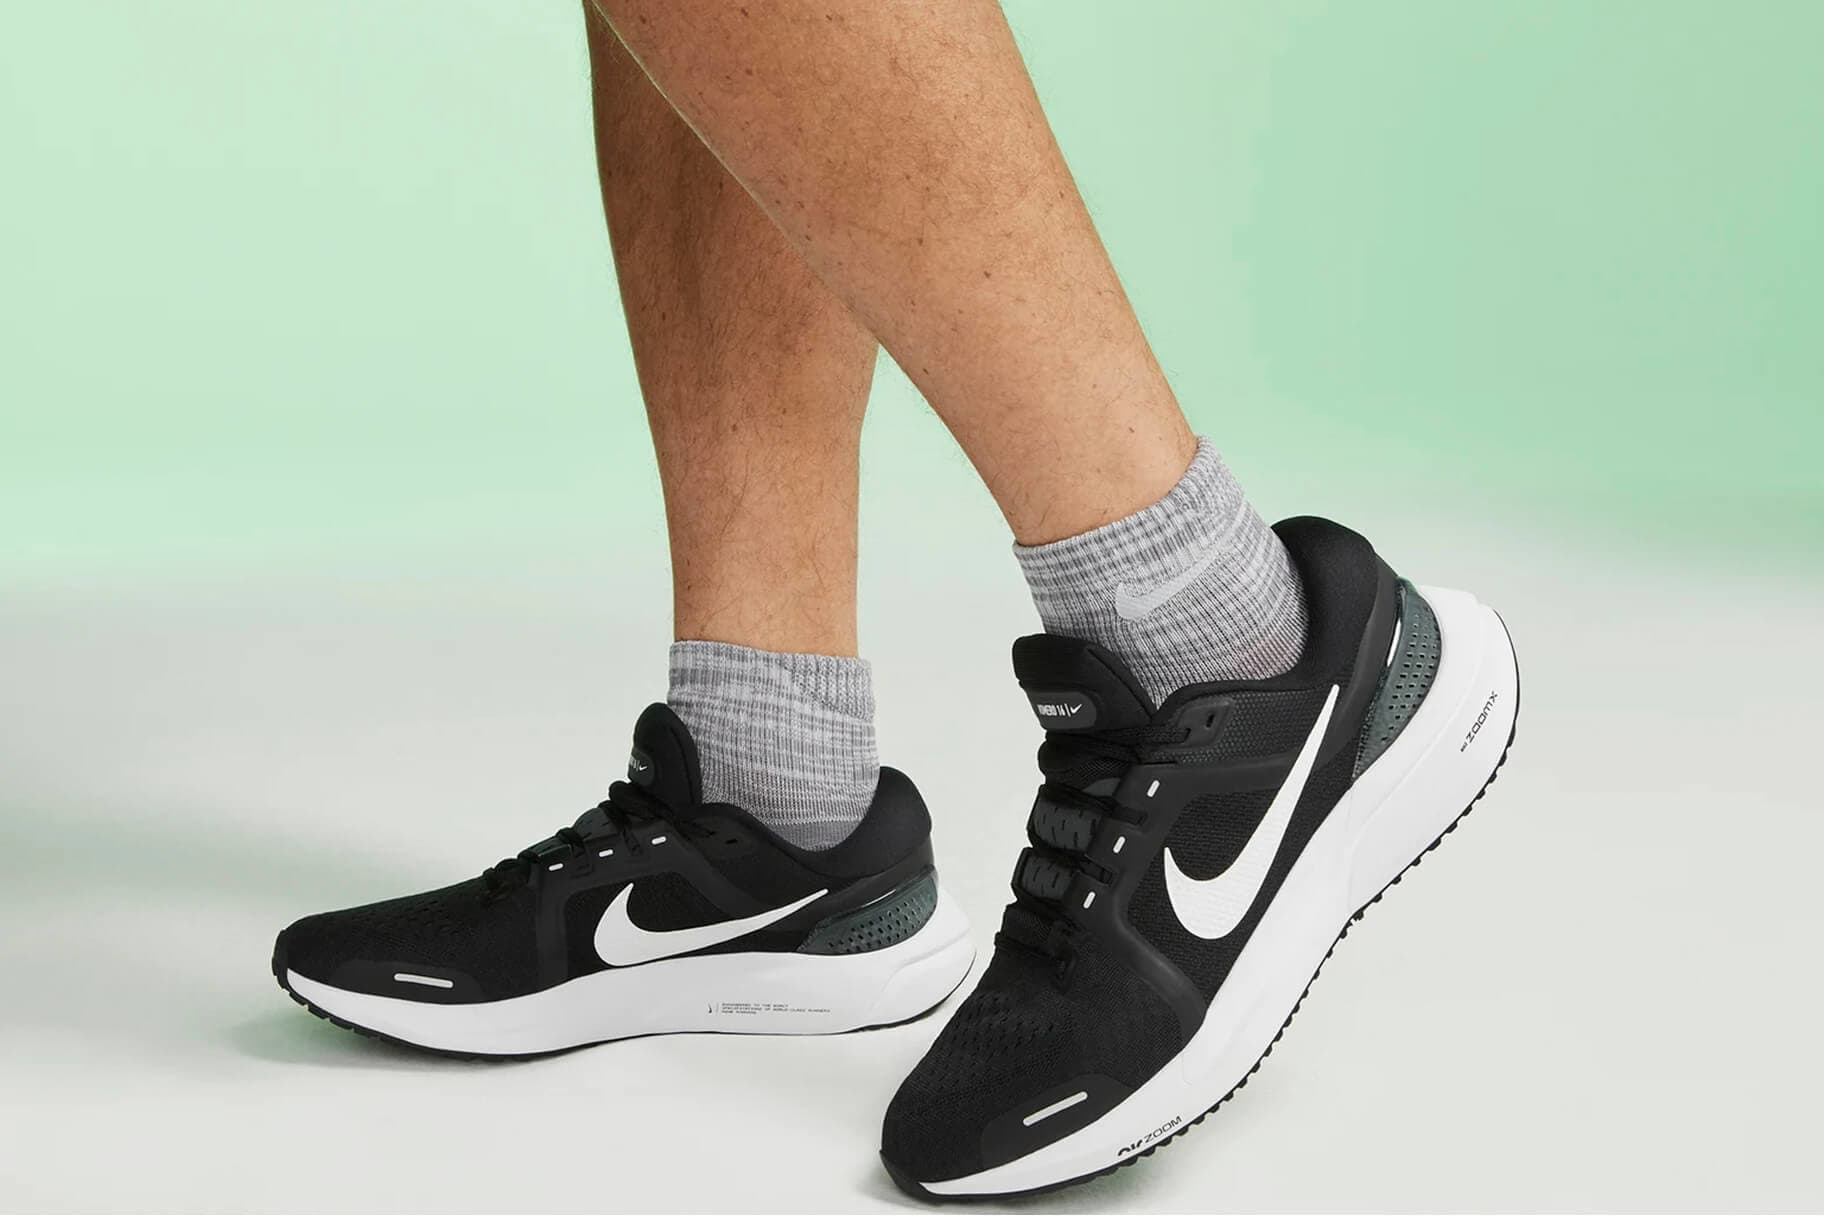 Mejores zapatillas Nike mujer para caminar